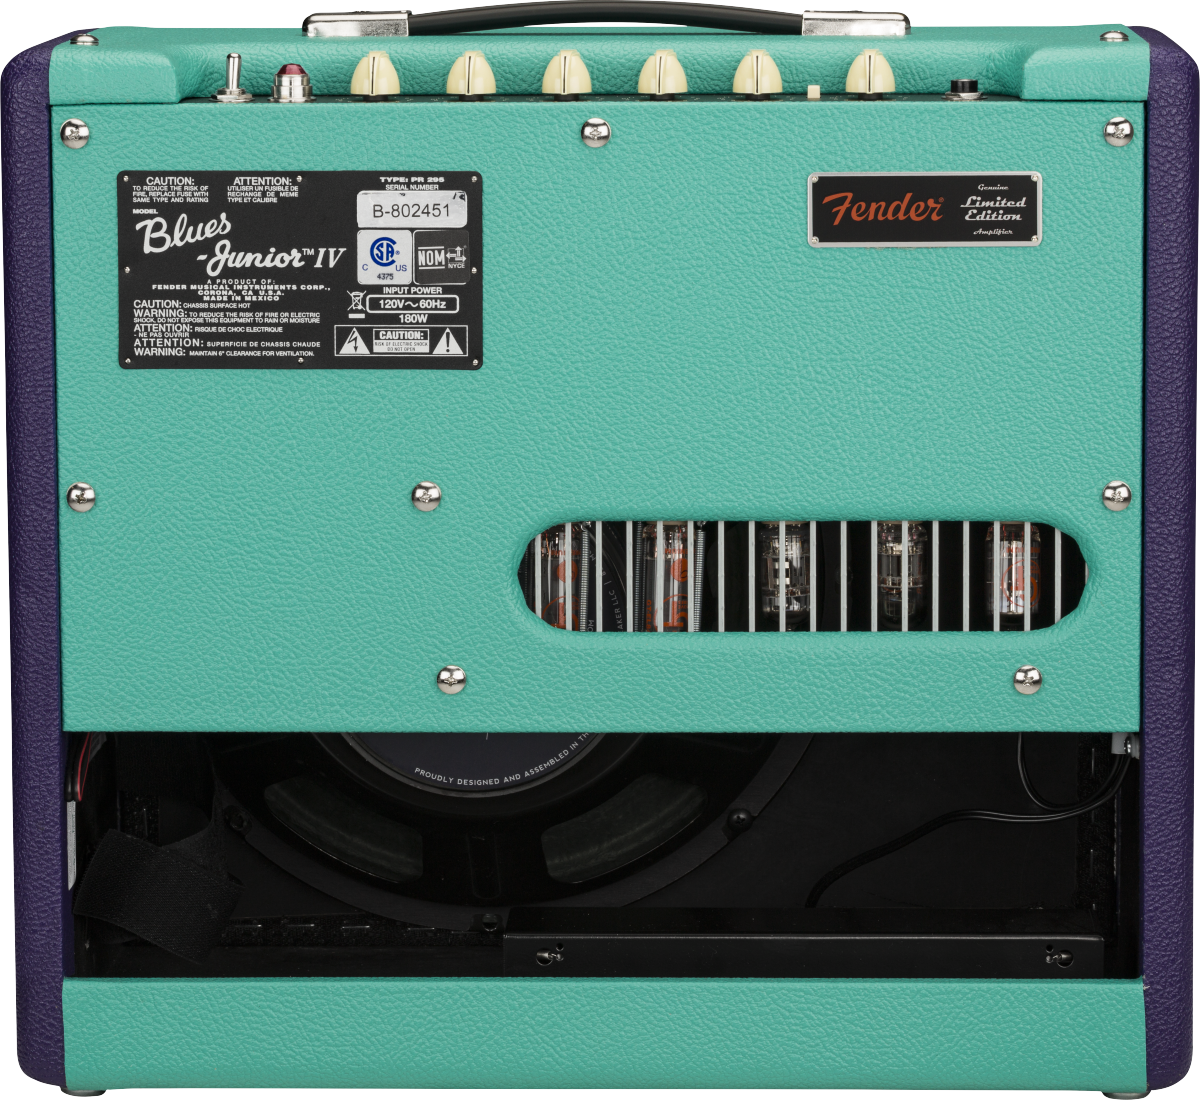 Fender Blues Junior Iv Fsr Ltd 15w 1x12 Jensen Cannabis Rex Purple Seafoam - Electric guitar combo amp - Variation 1